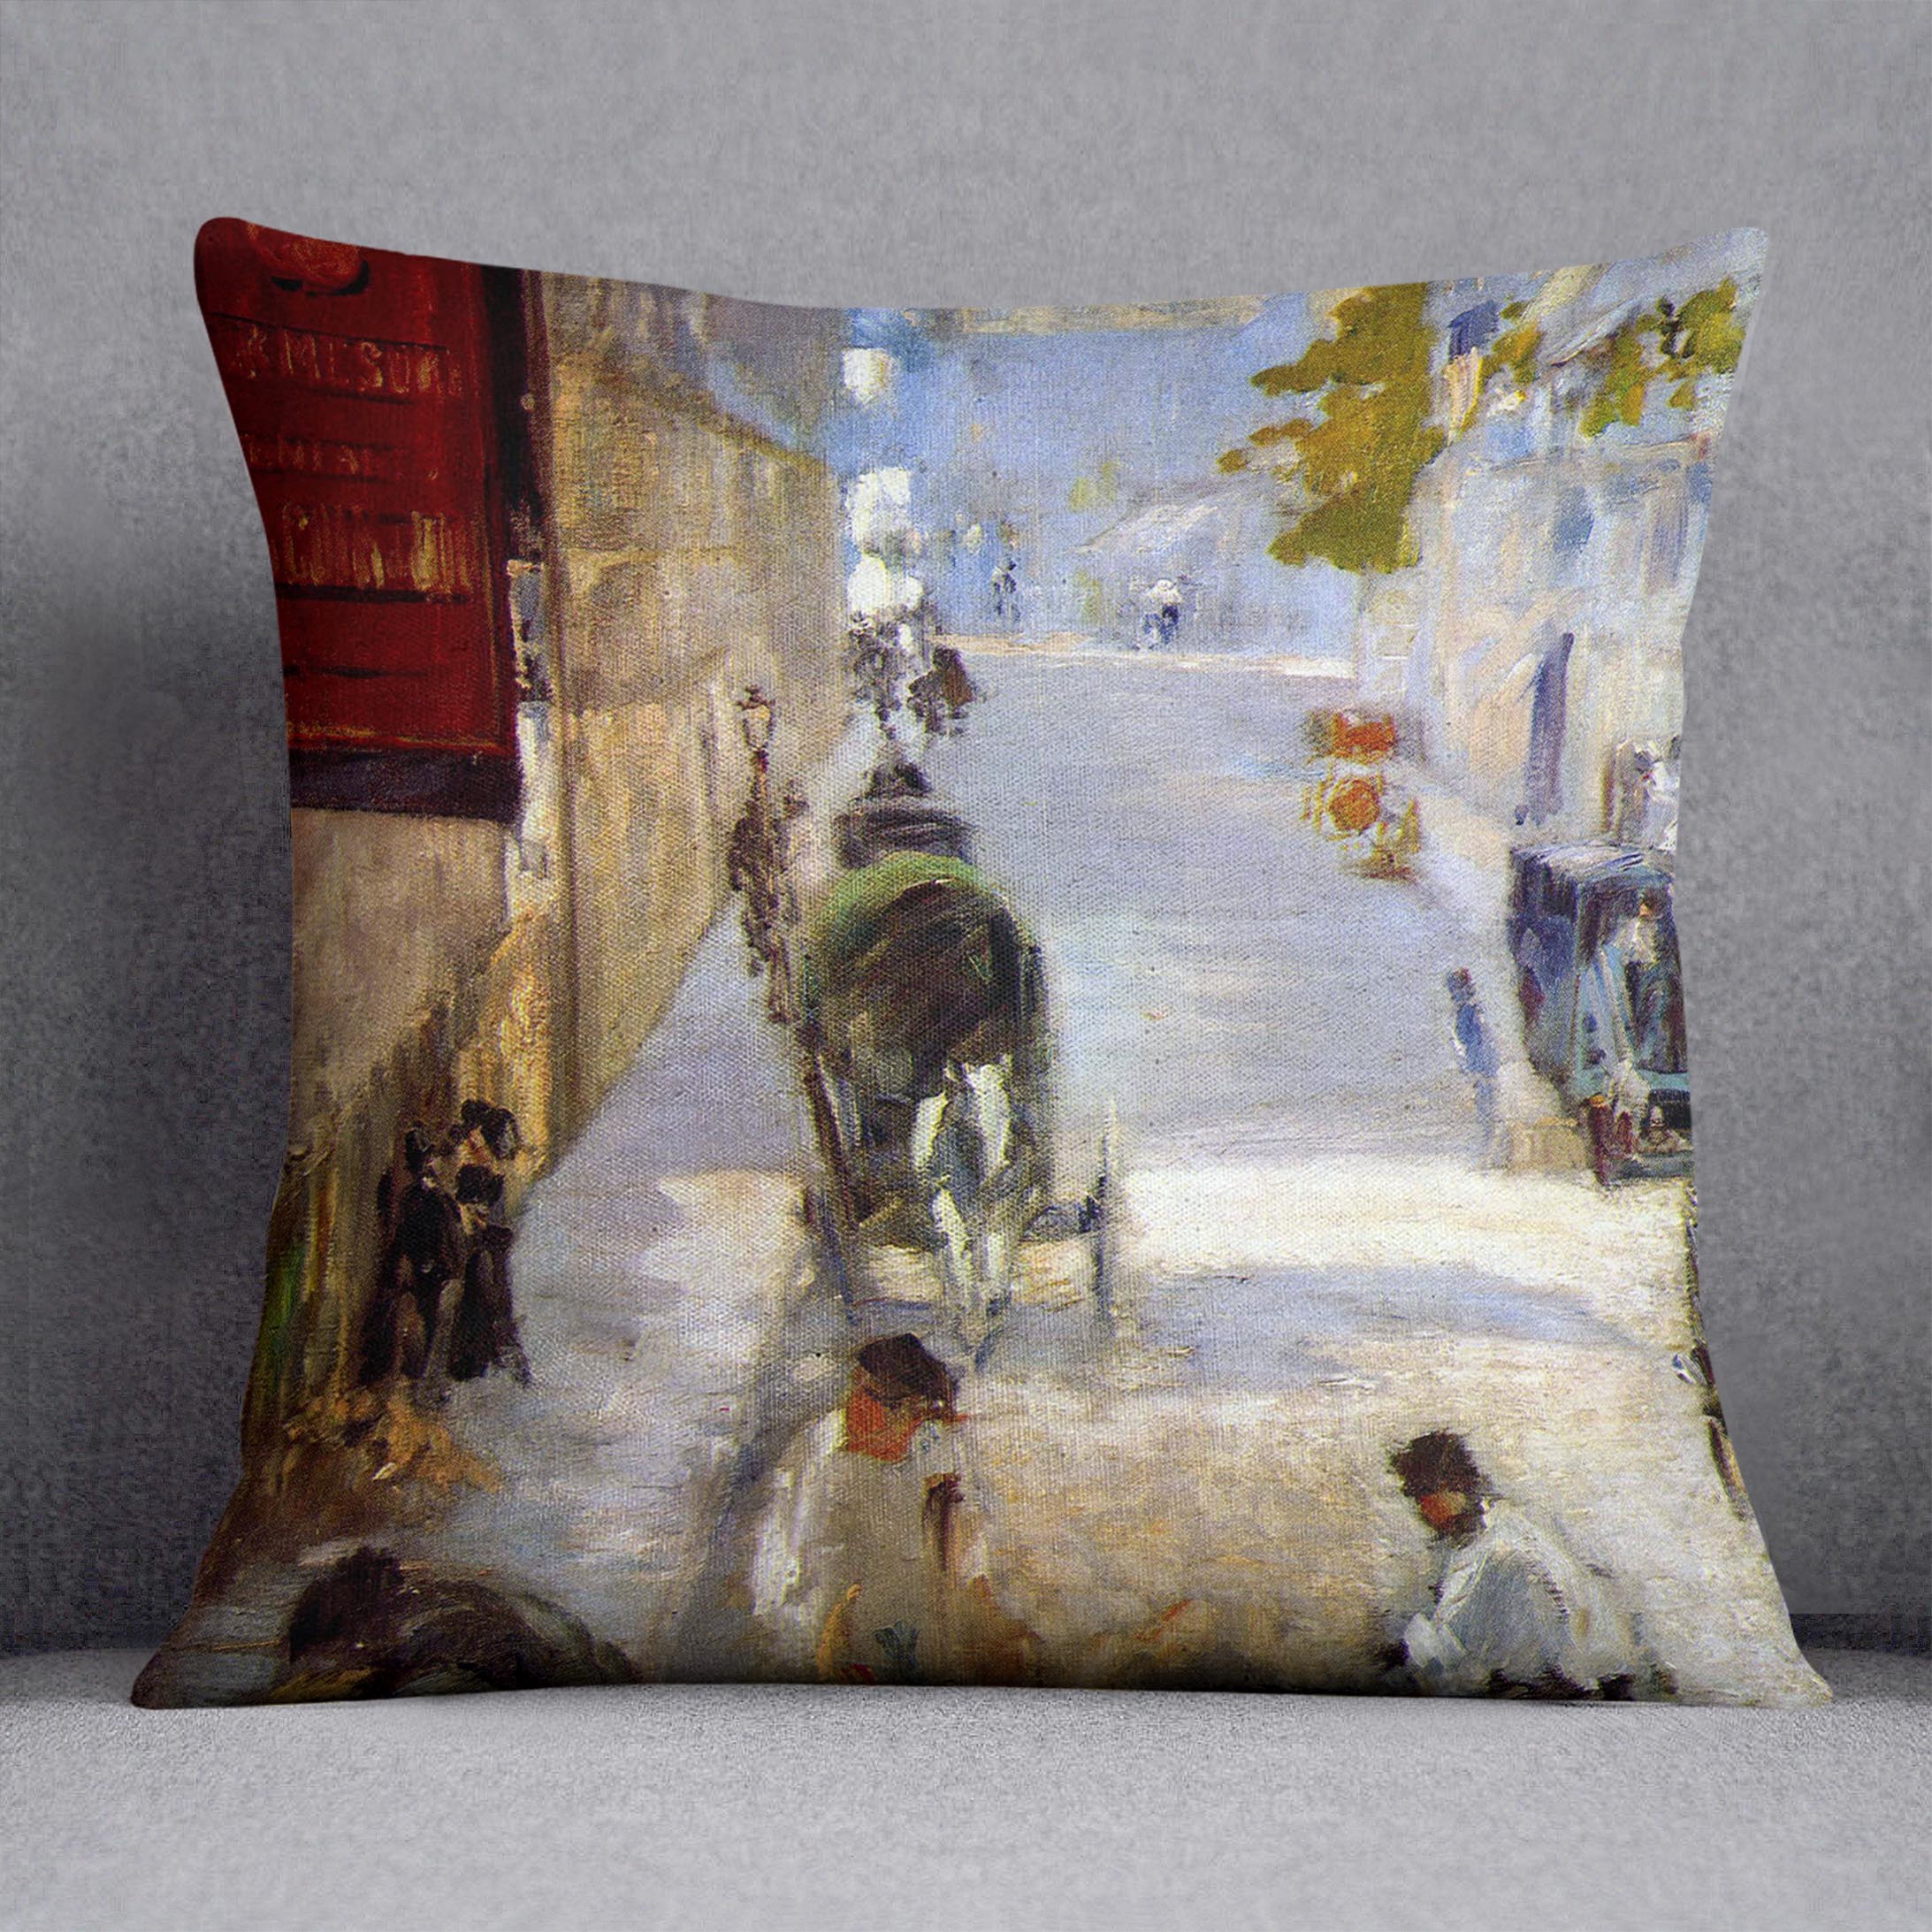 Road workers rue de Berne detail by Manet Cushion